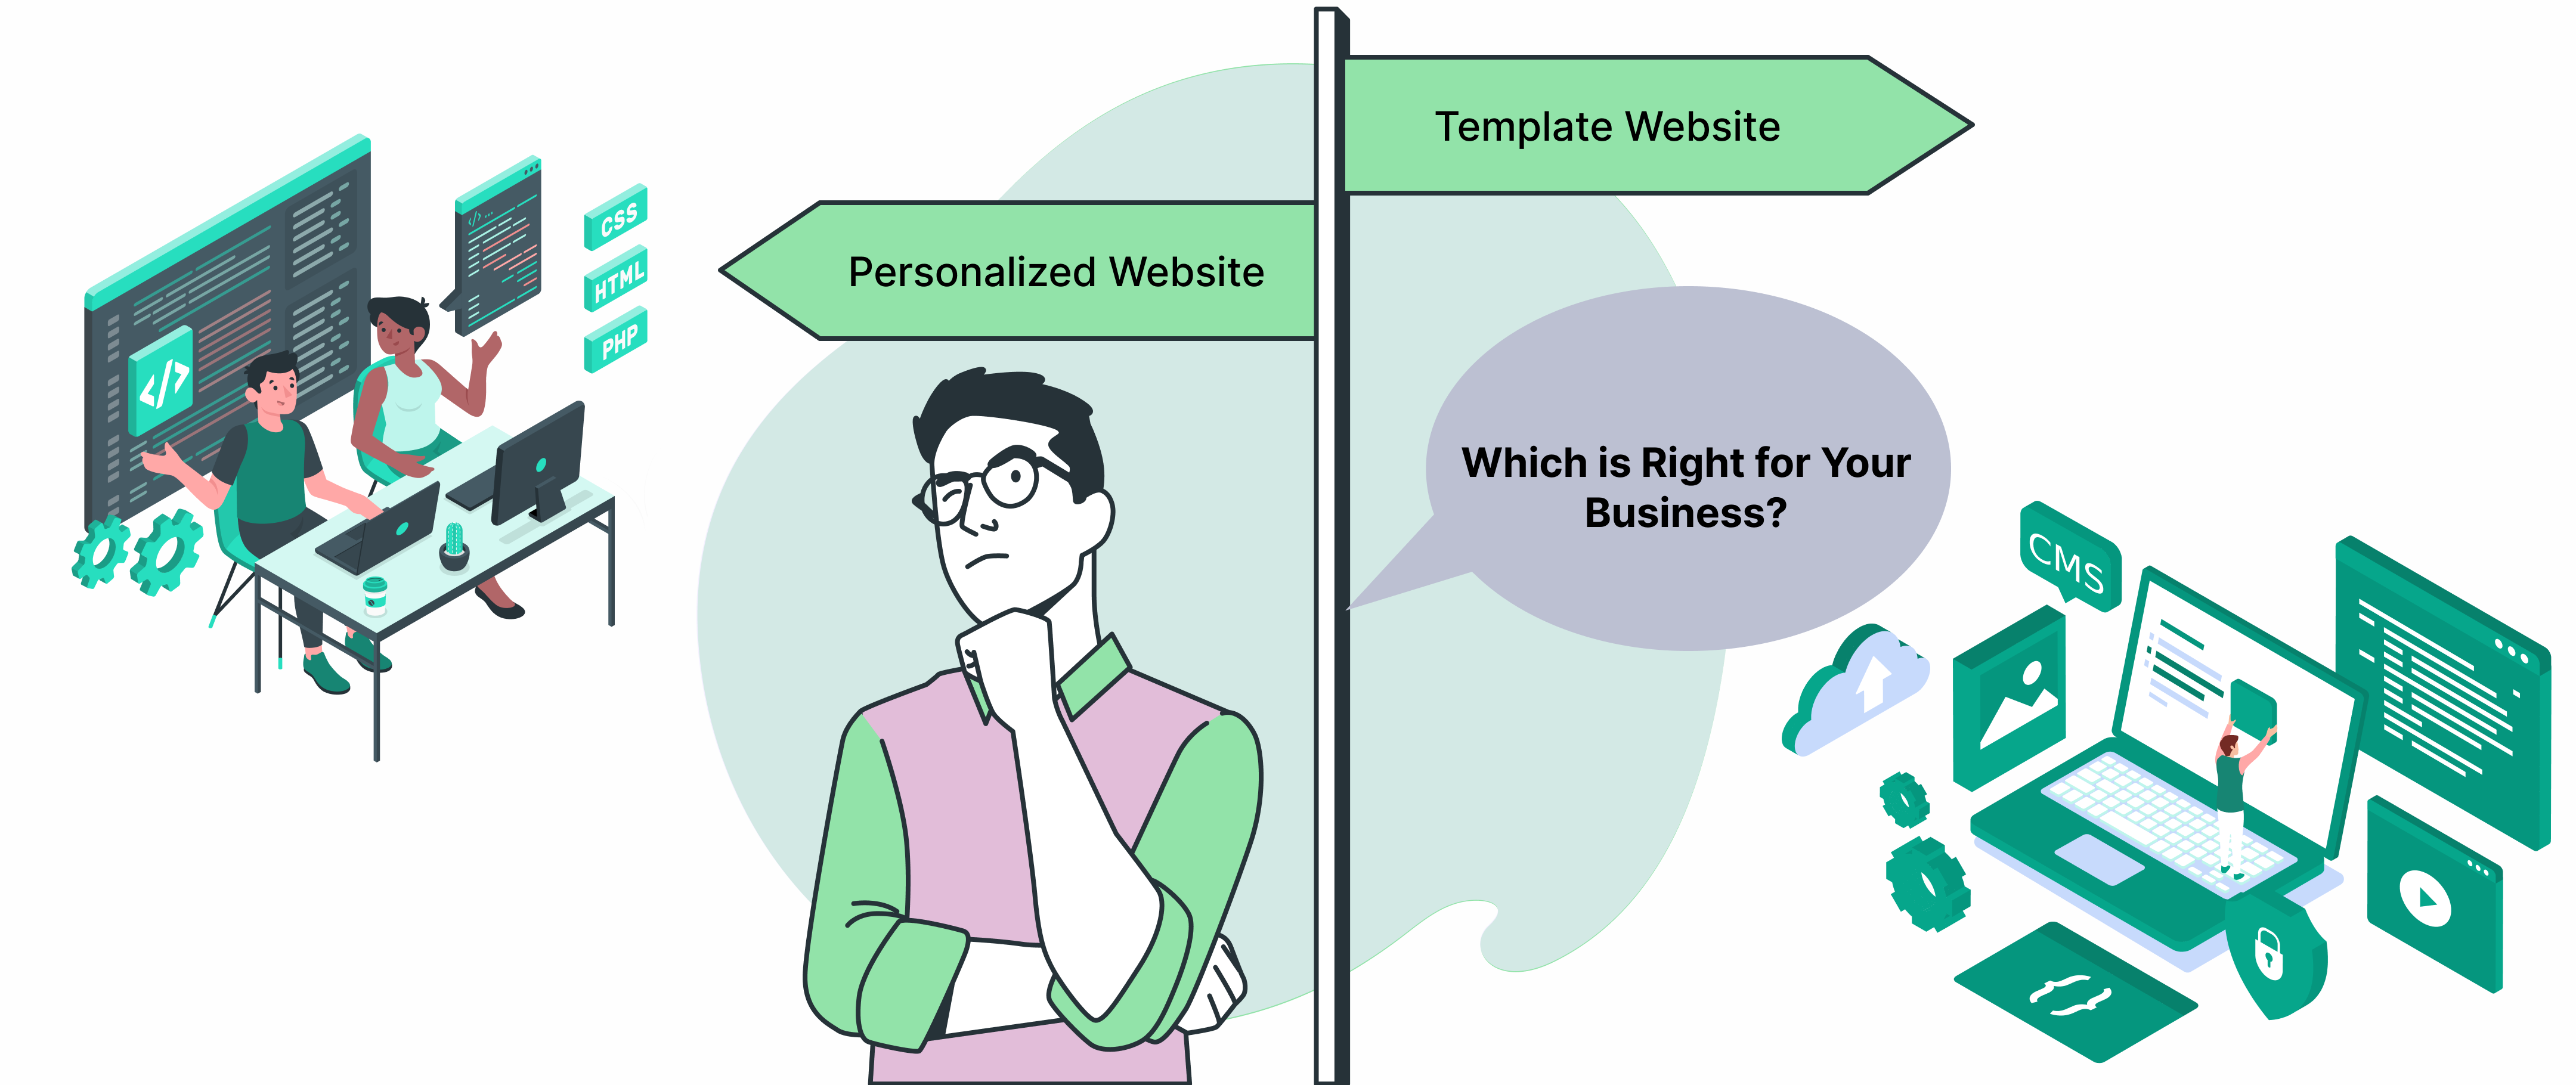 Custom Website vs Template Website